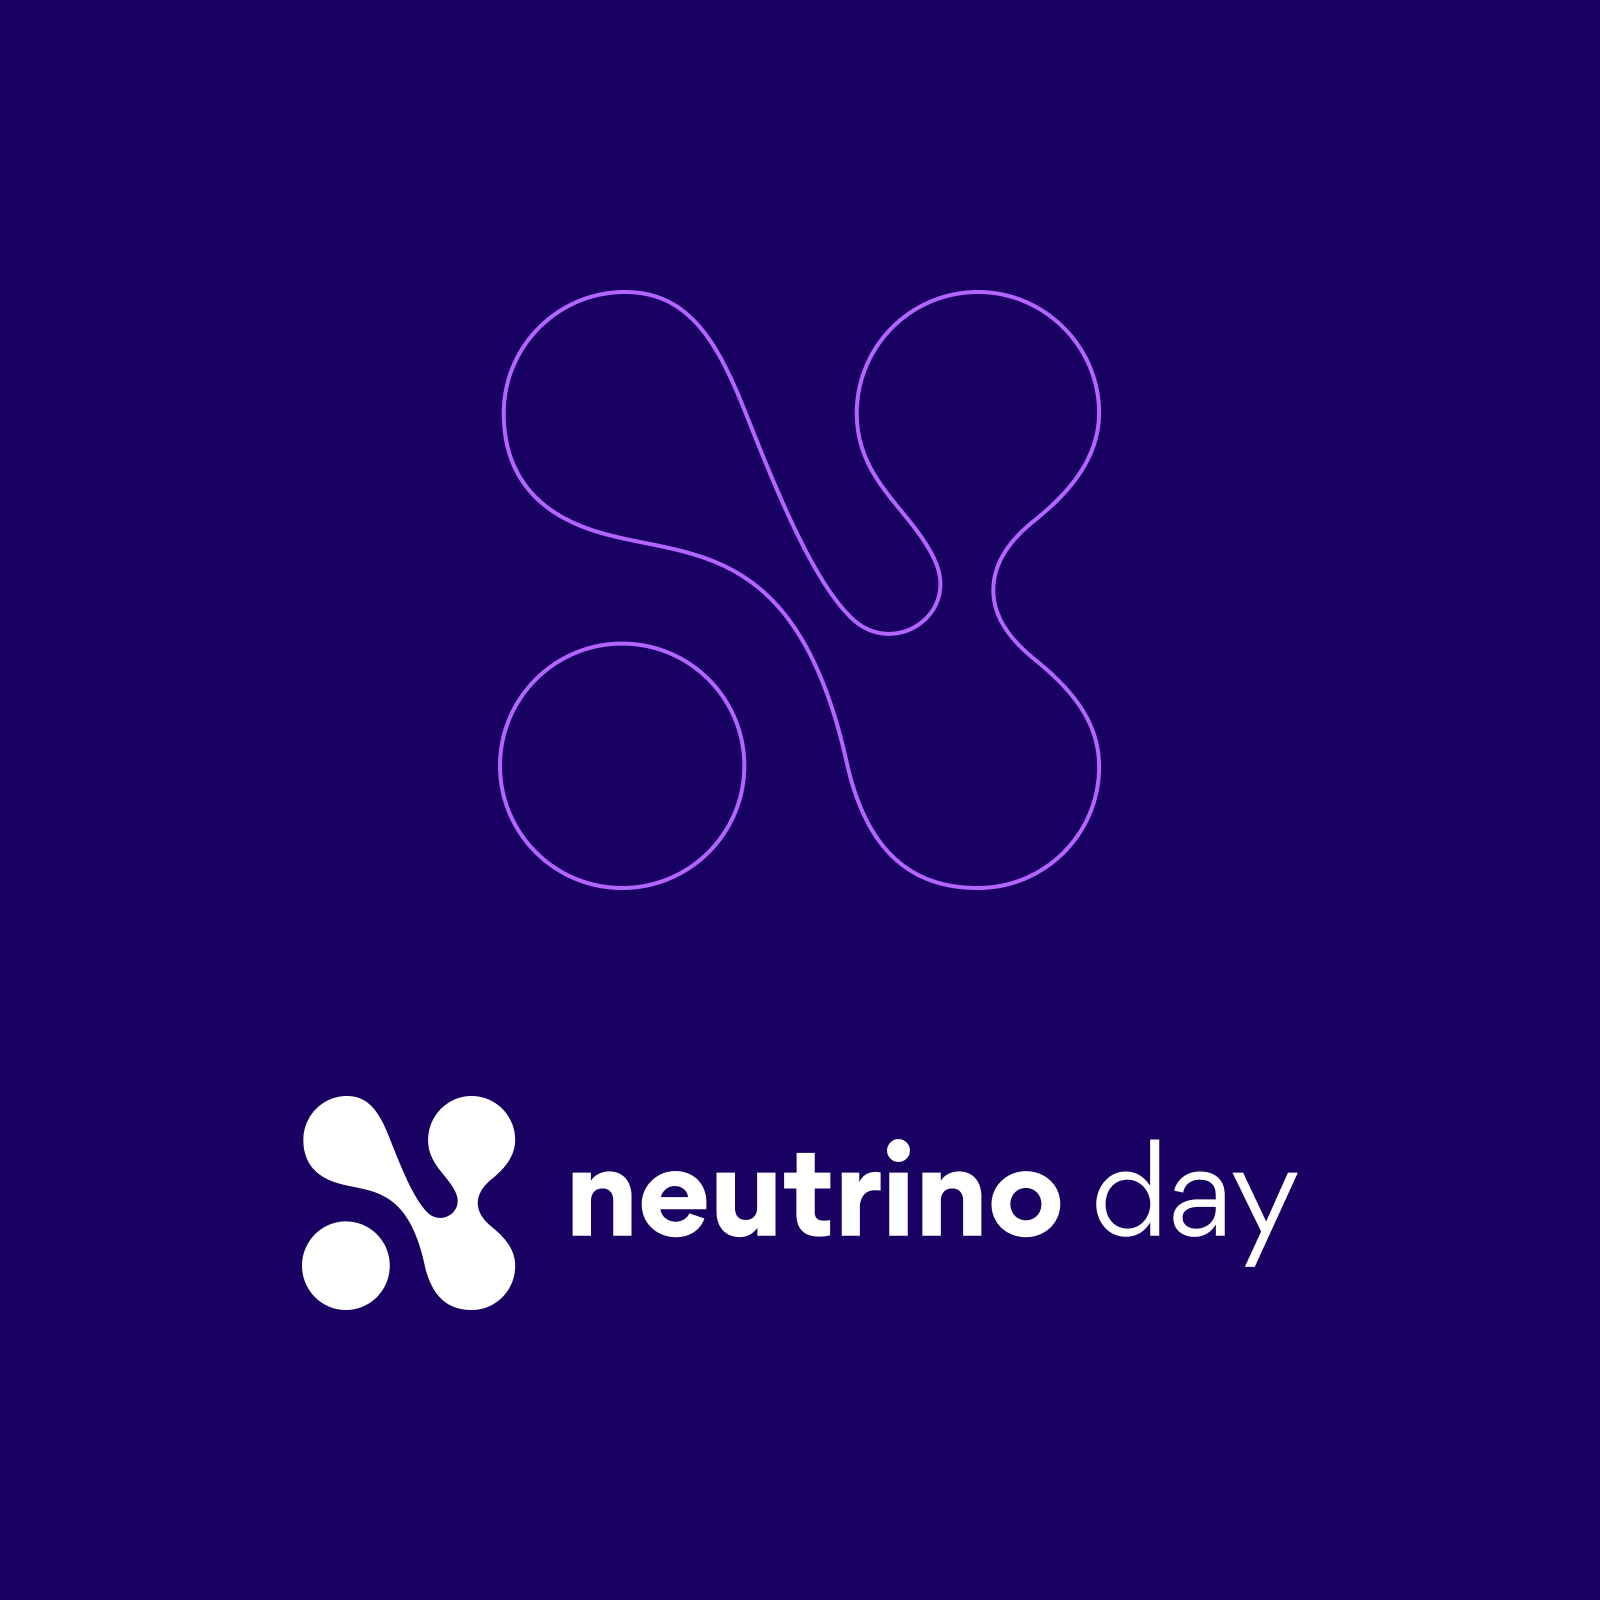 Chosen typography for the new Neutrino Day brand